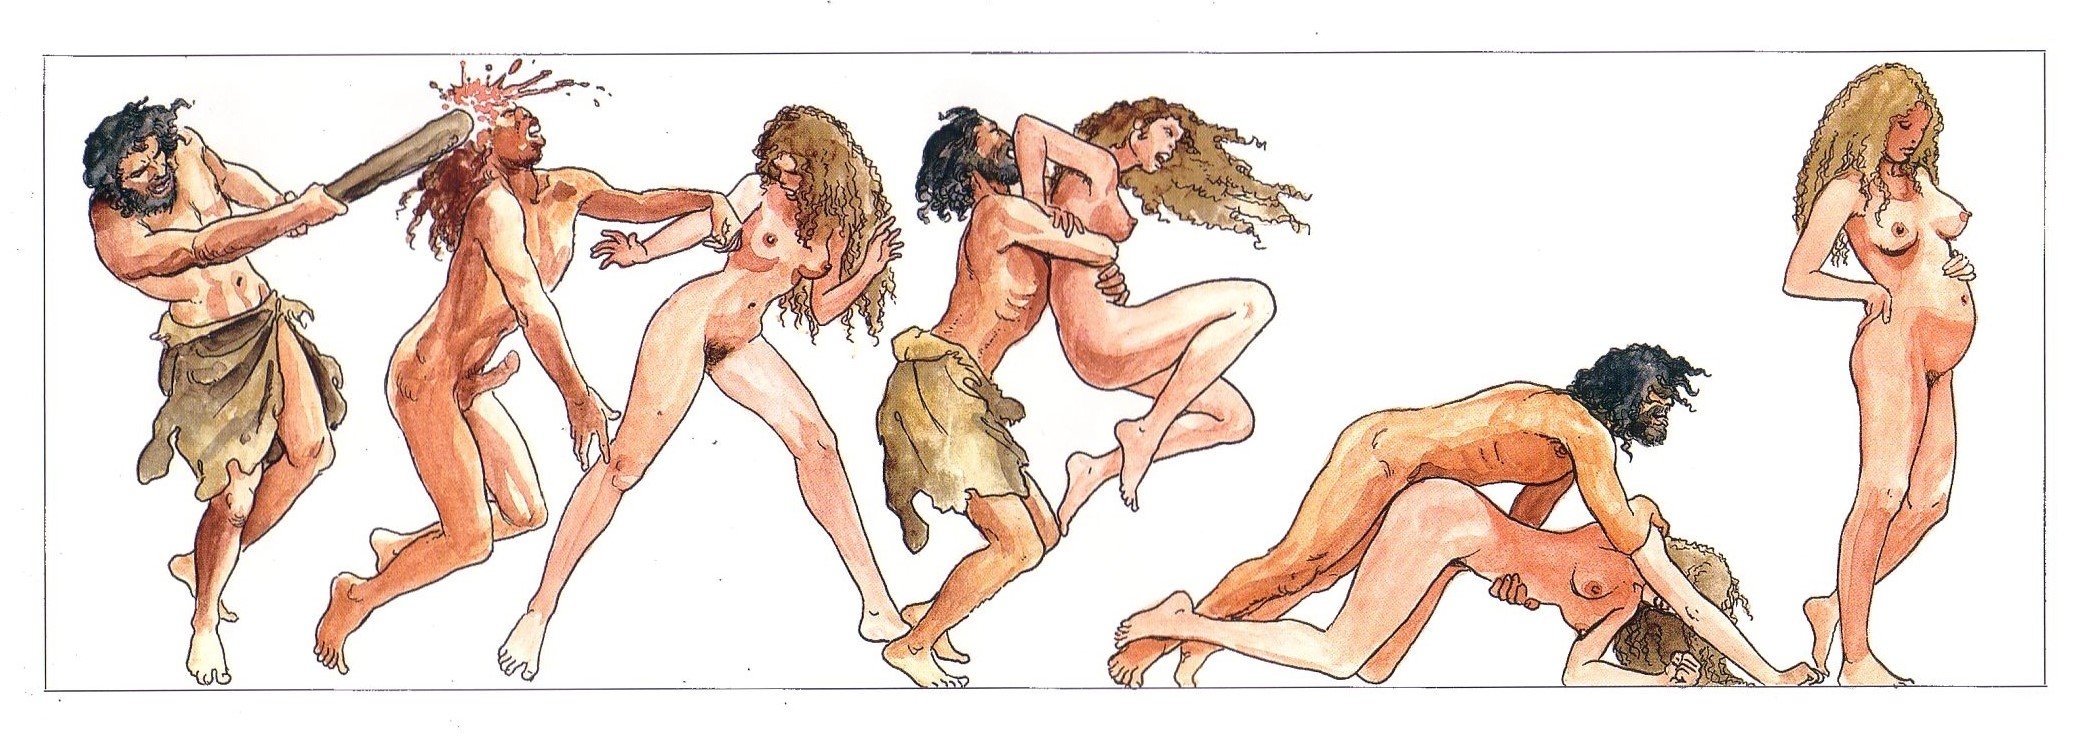 древняя эротика комиксы фото 17